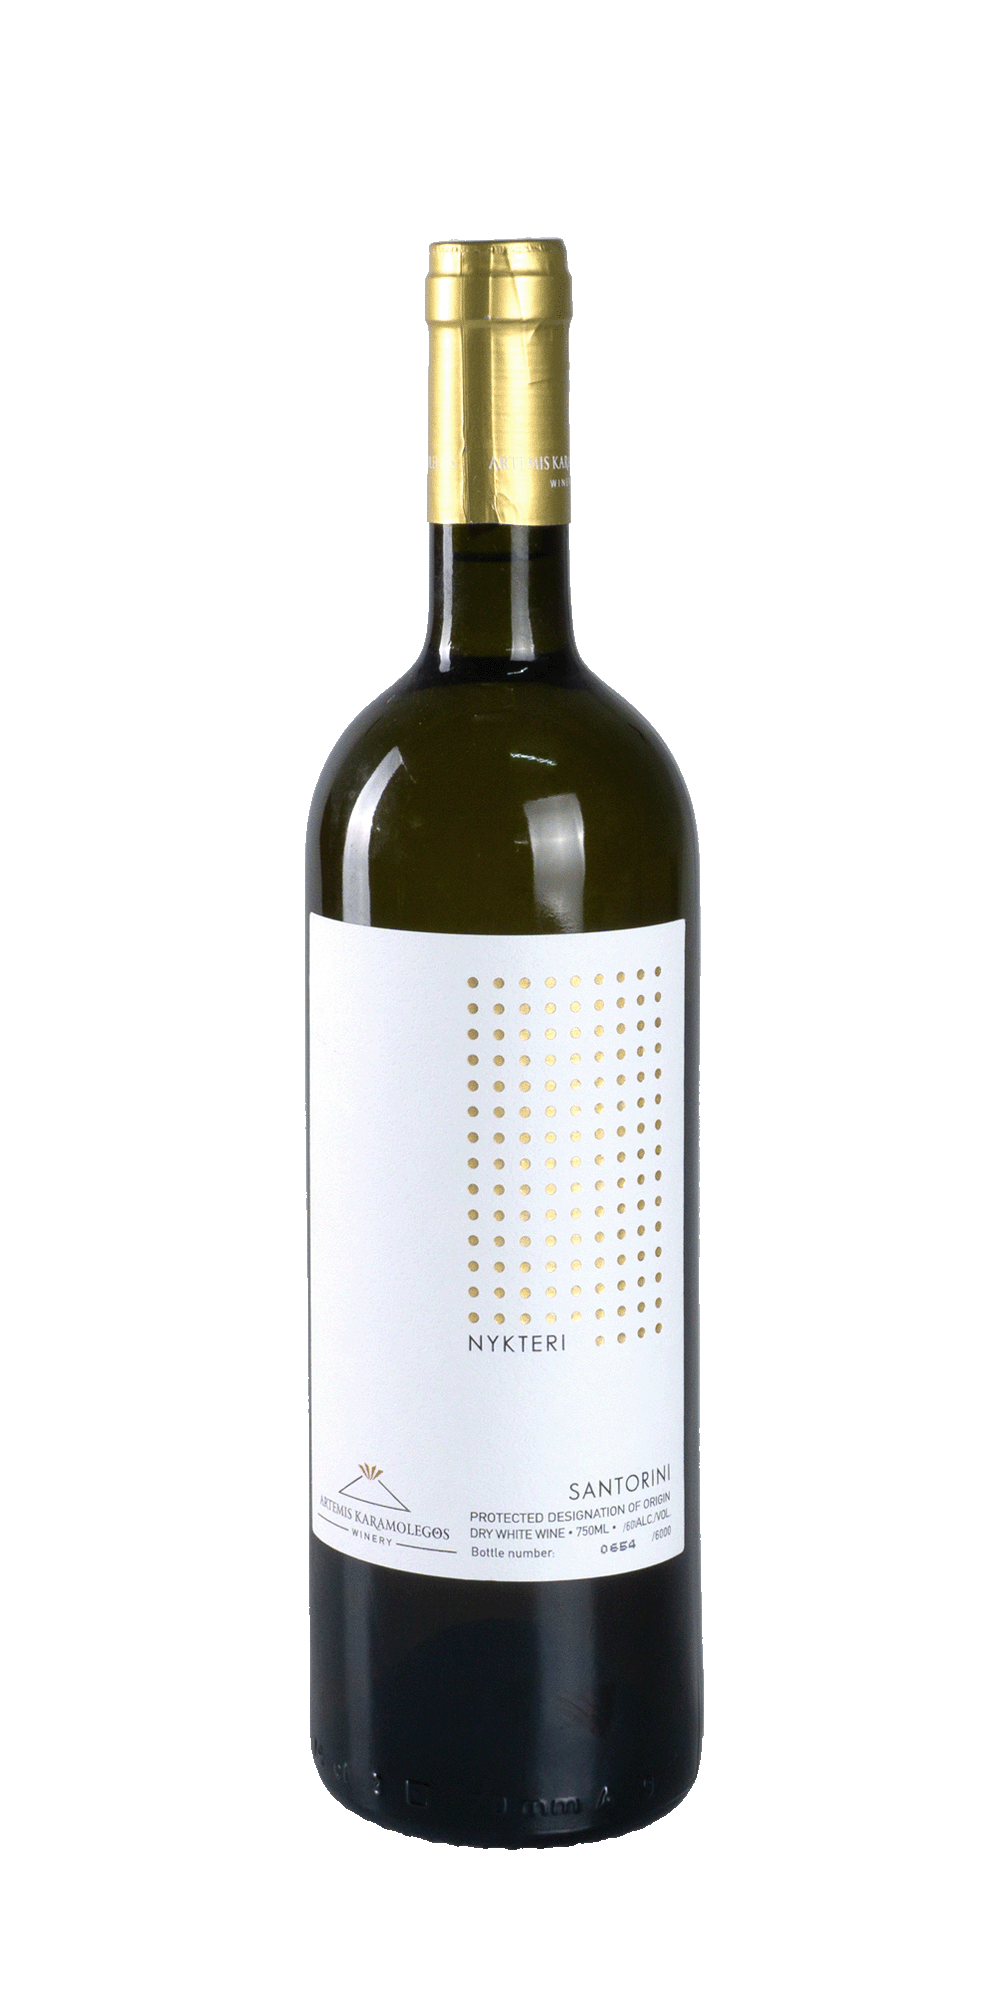 Nykteri Santorini 2020 - Artemis Karamolegos Winery